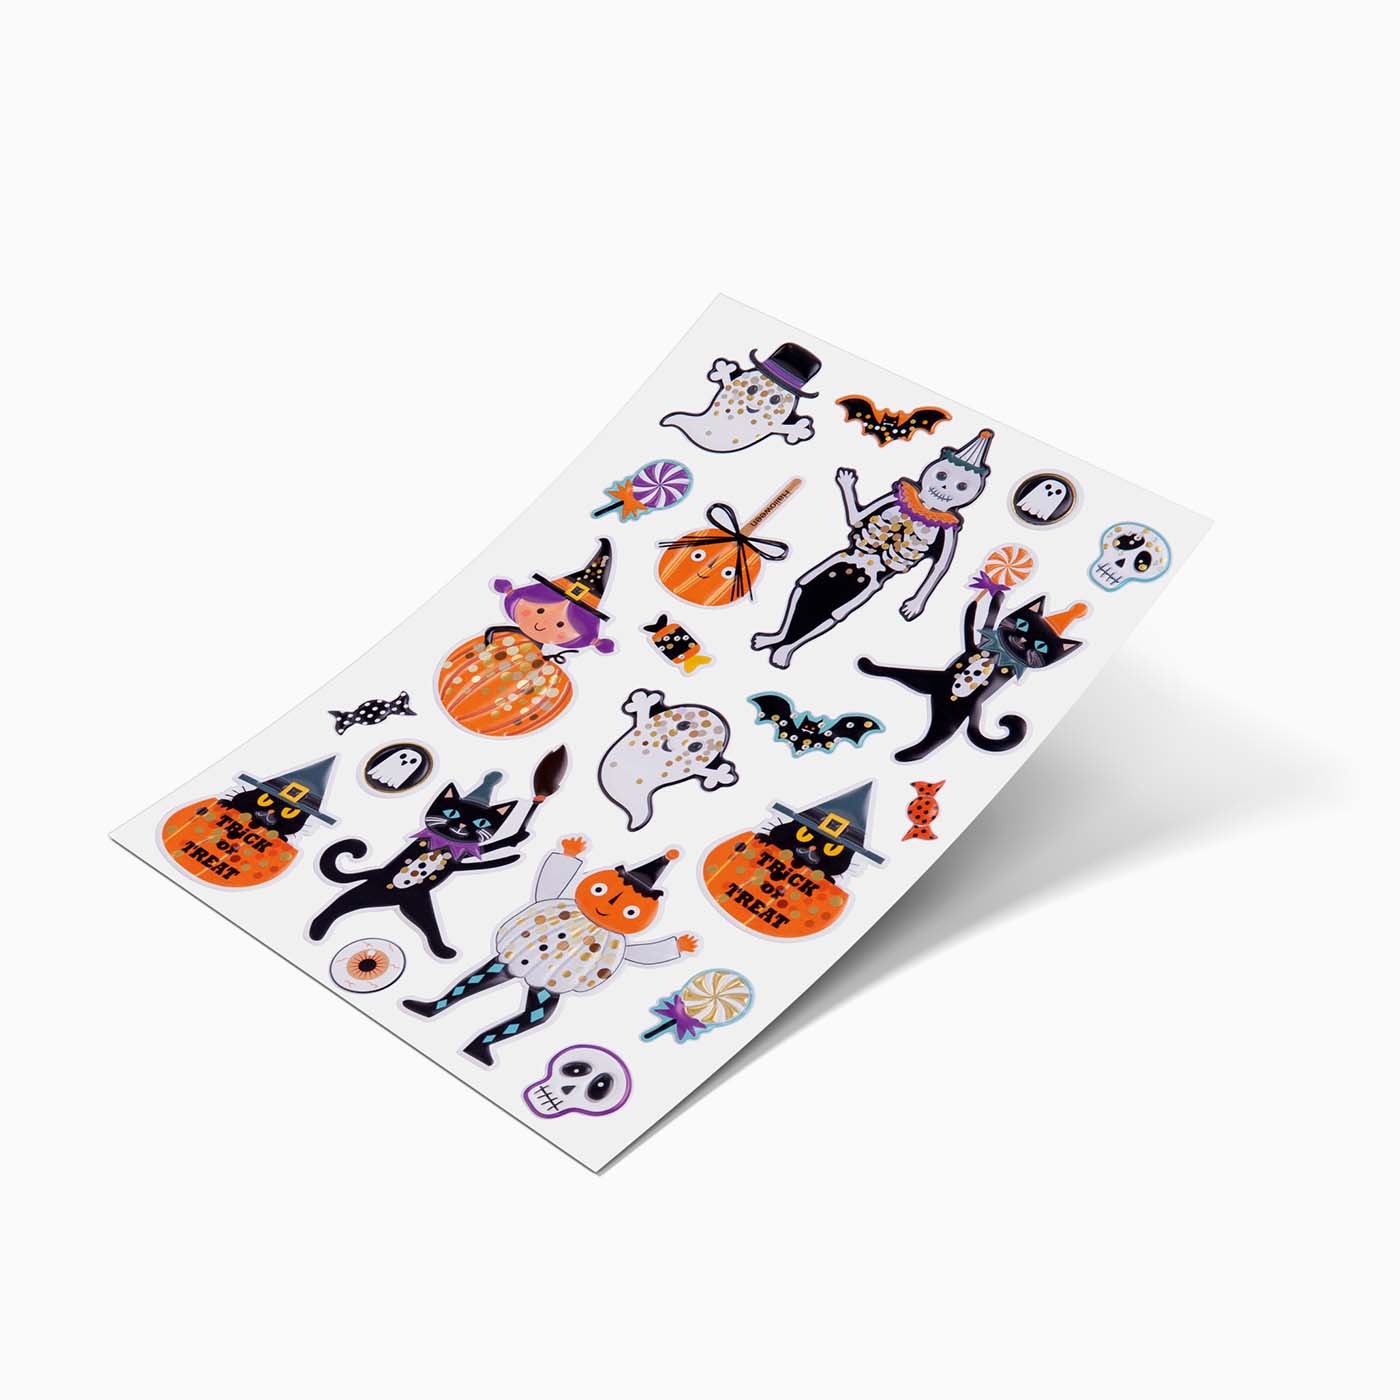 Halloween skeleton and pumpkins relief stickers